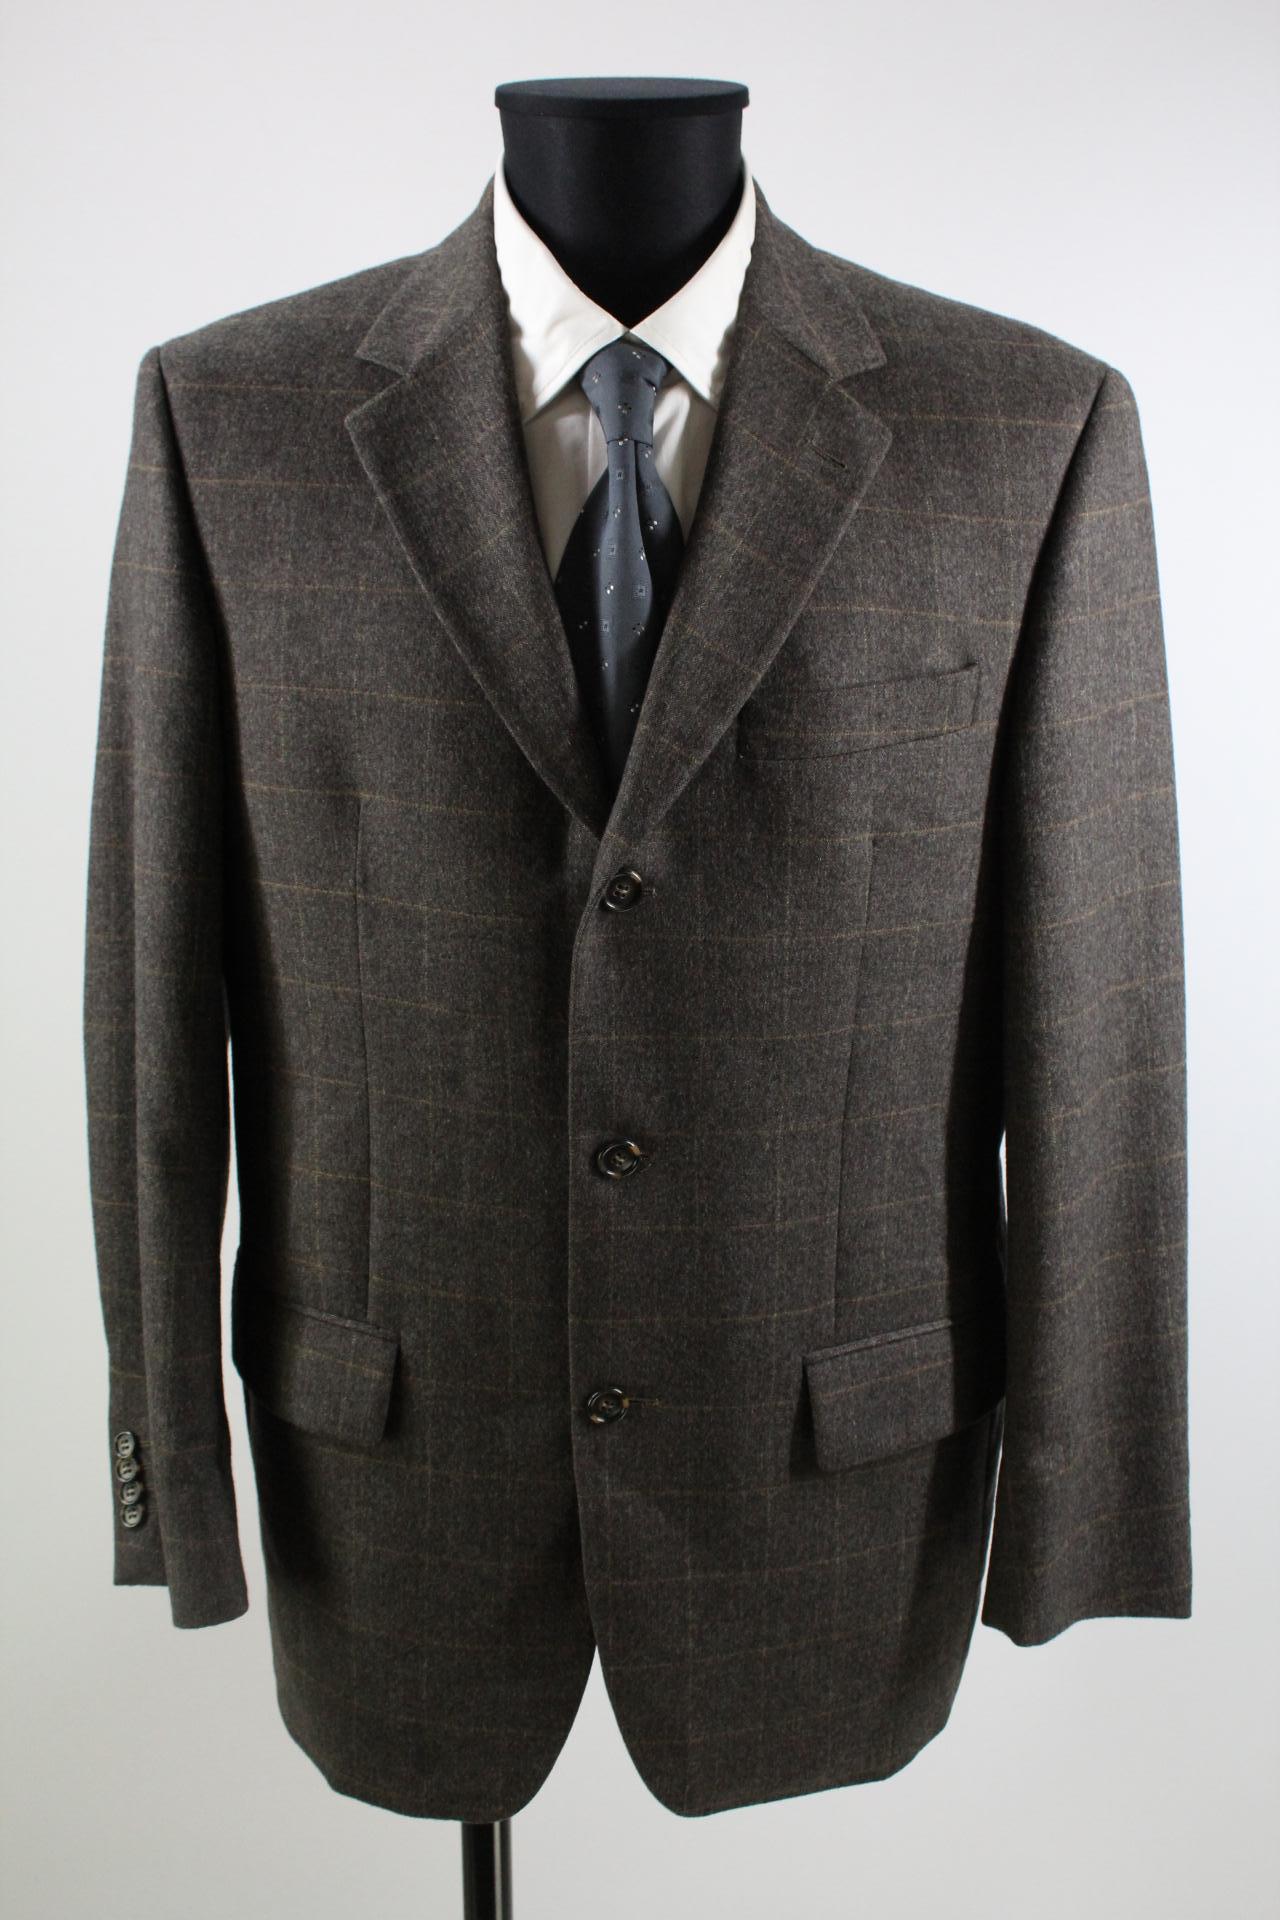 Breuninger Tweed-Sakko braungrau Größe 52